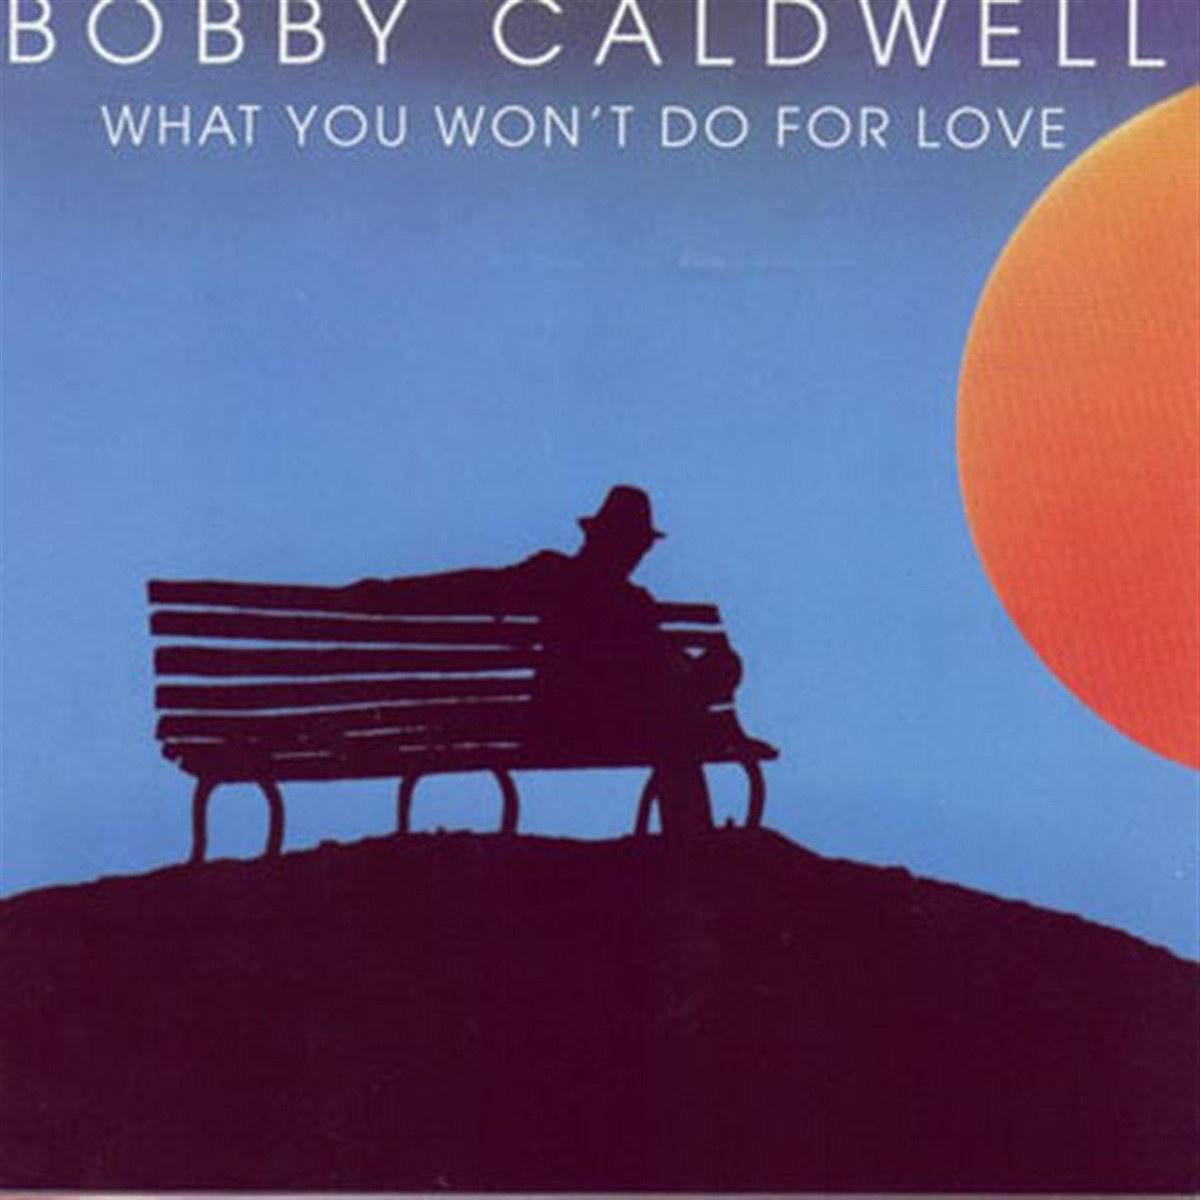 My Flame歌词 歌手Bobby Caldwell-专辑What You Won't Do For Love-单曲《My Flame》LRC歌词下载